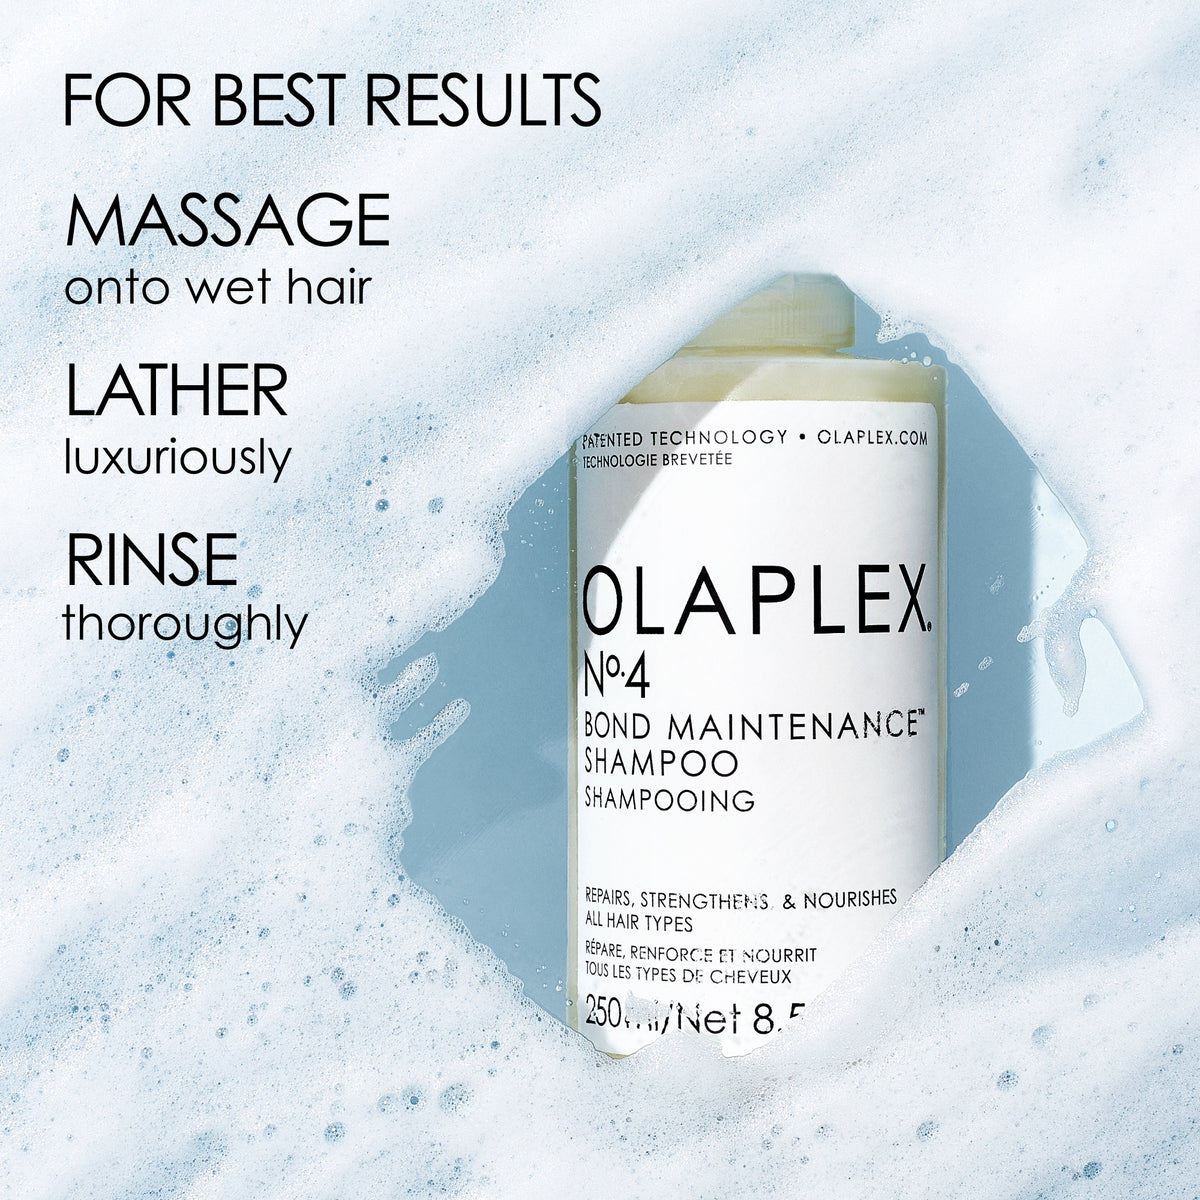 Olaplex Nâº.4 Bond Maintenance Shampoo